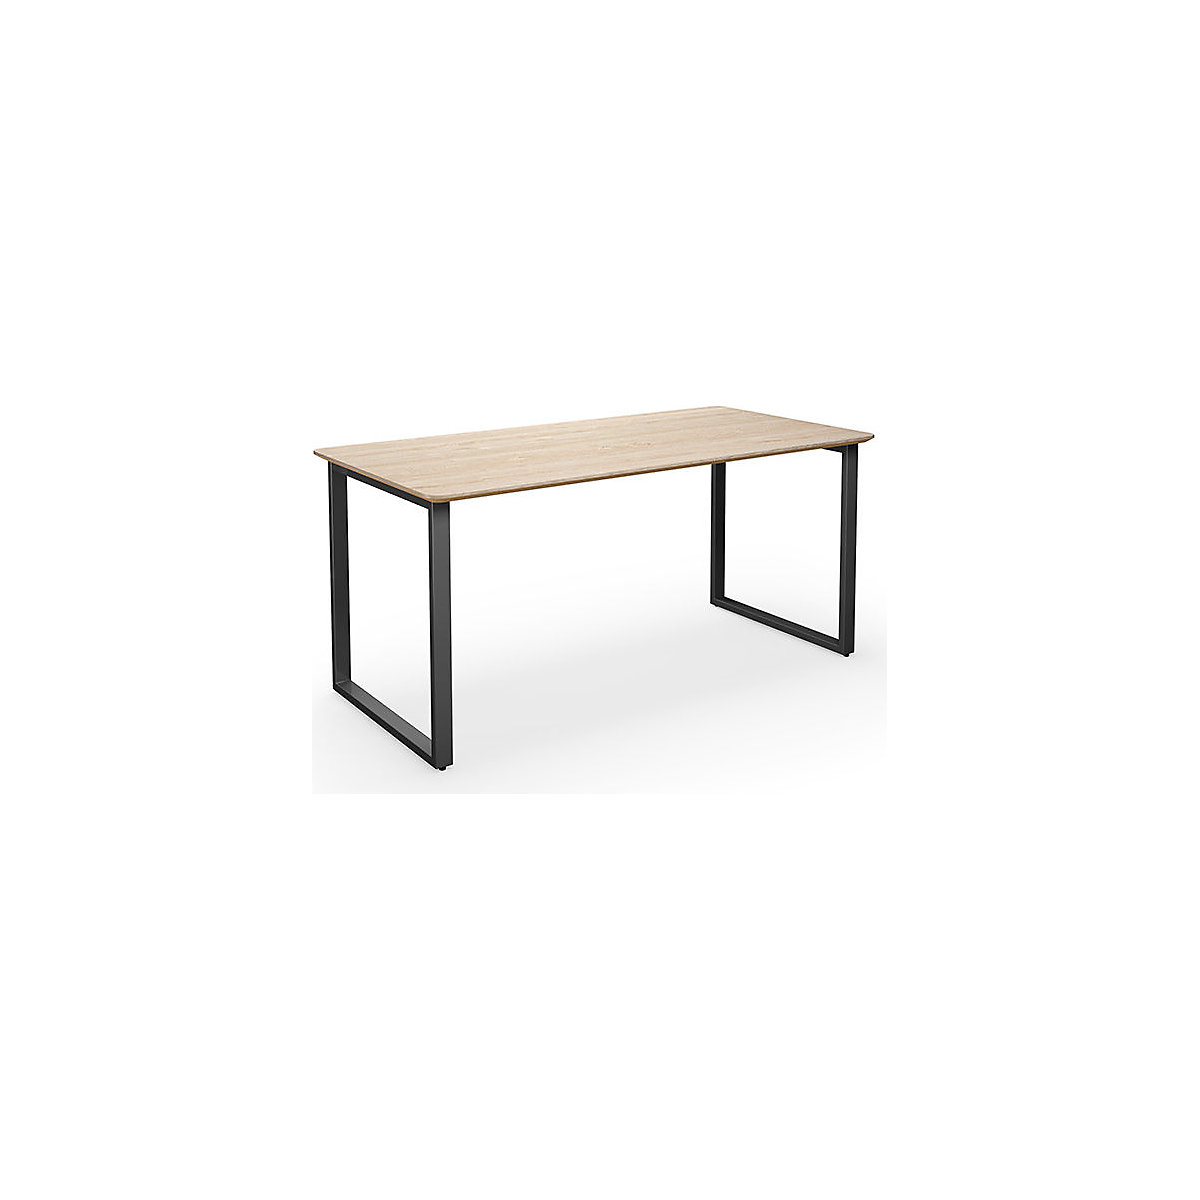 DUO-O Trend multi-purpose desk, straight tabletop, rounded corners, WxD 1600 x 800 mm, oak, black-5